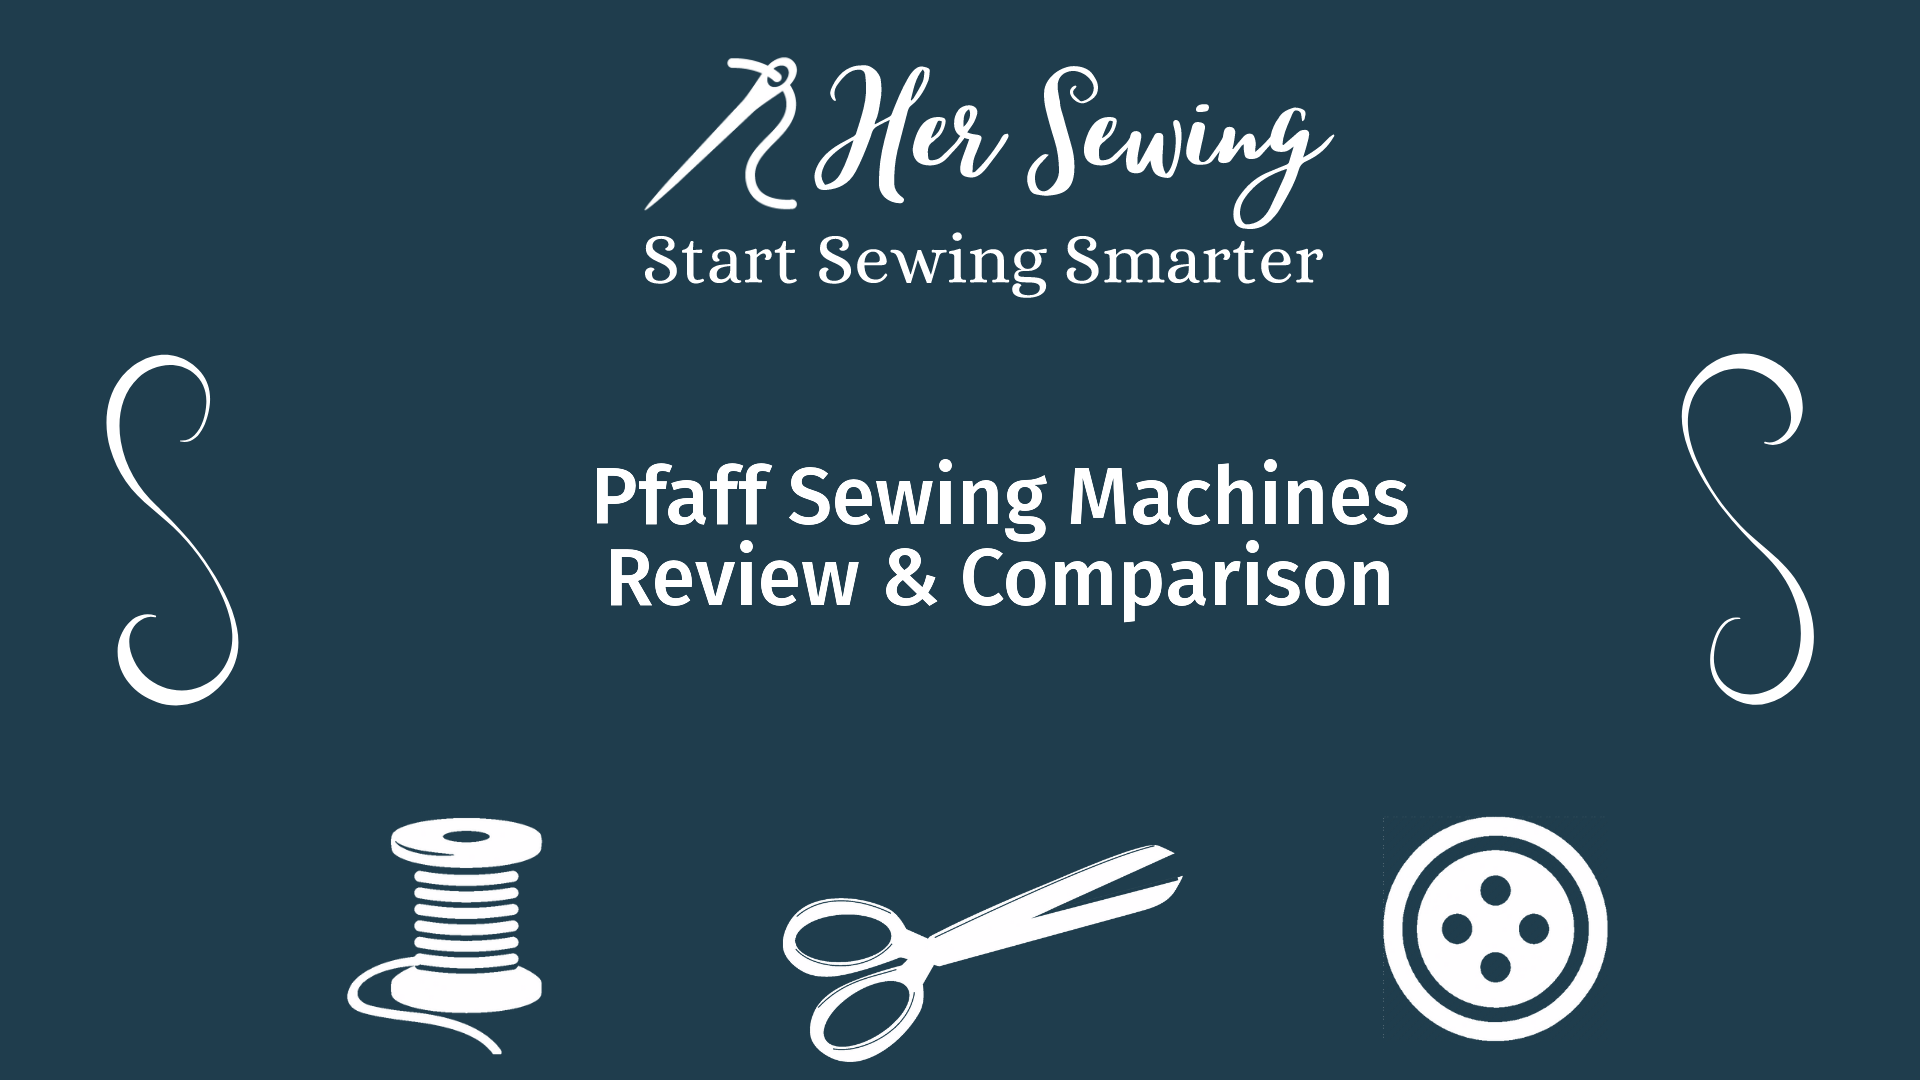 Pfaff Sewing Machines Review & Comparison